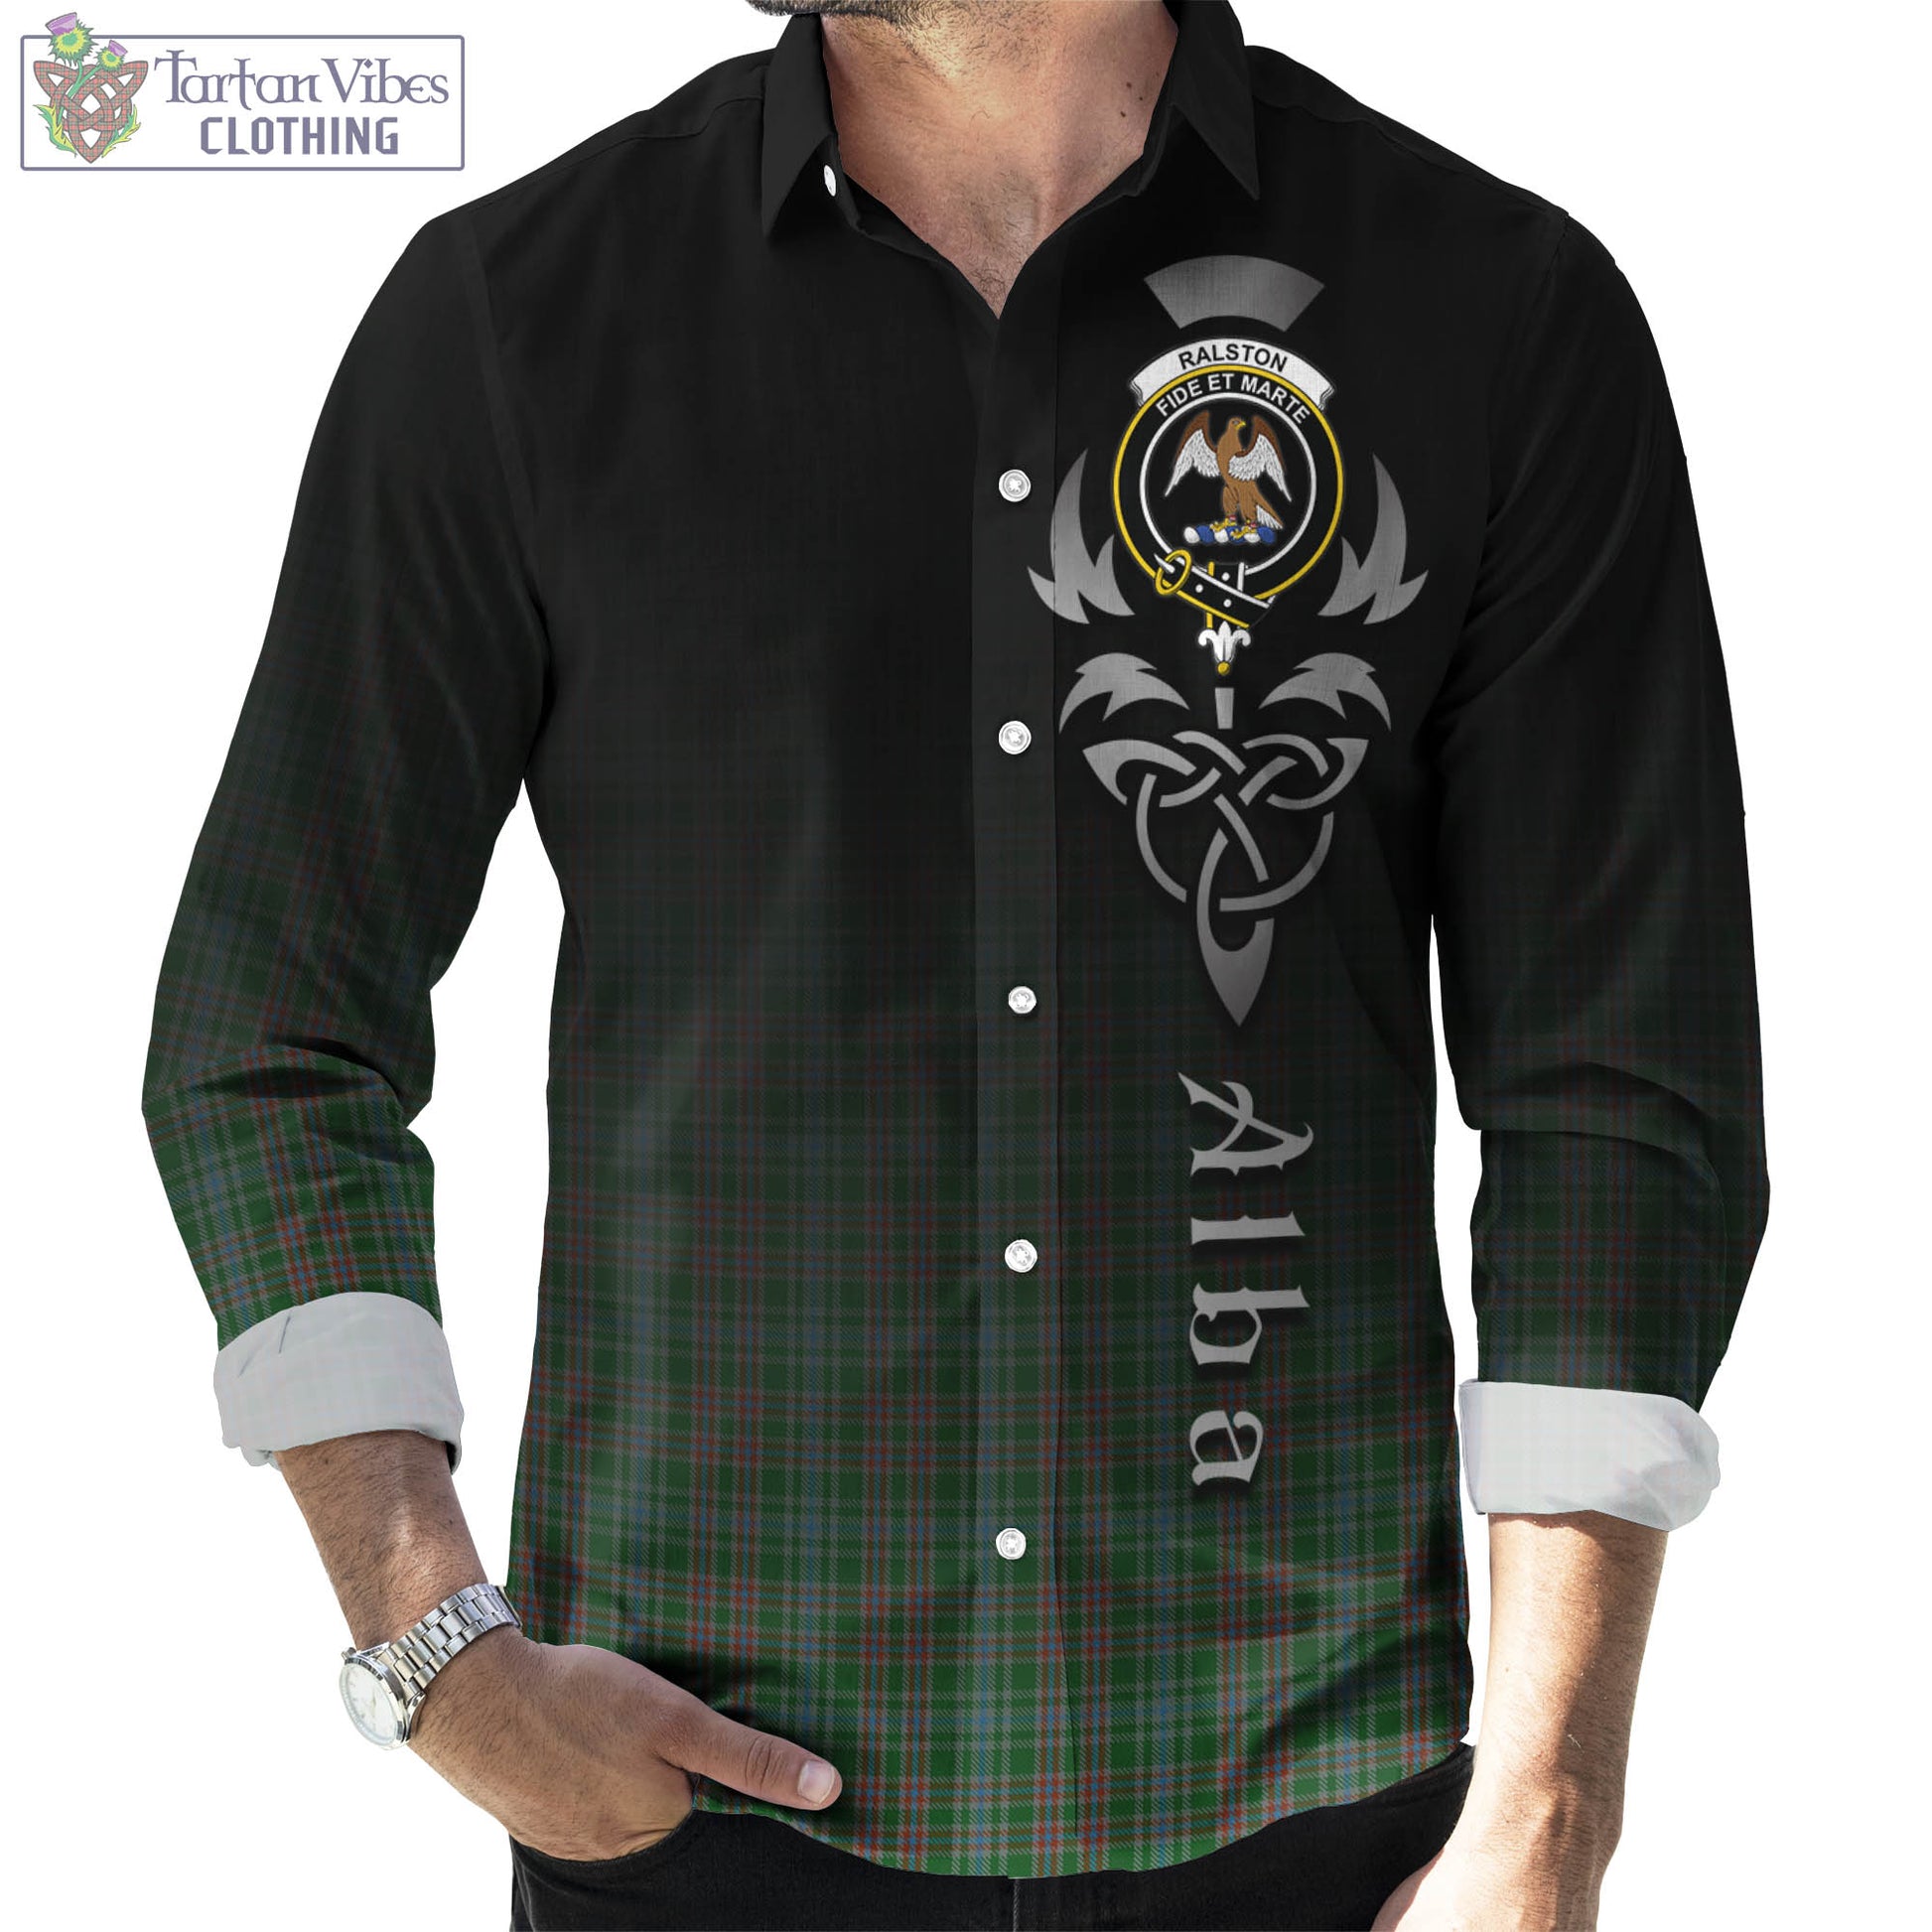 Tartan Vibes Clothing Ralston USA Tartan Long Sleeve Button Up Featuring Alba Gu Brath Family Crest Celtic Inspired